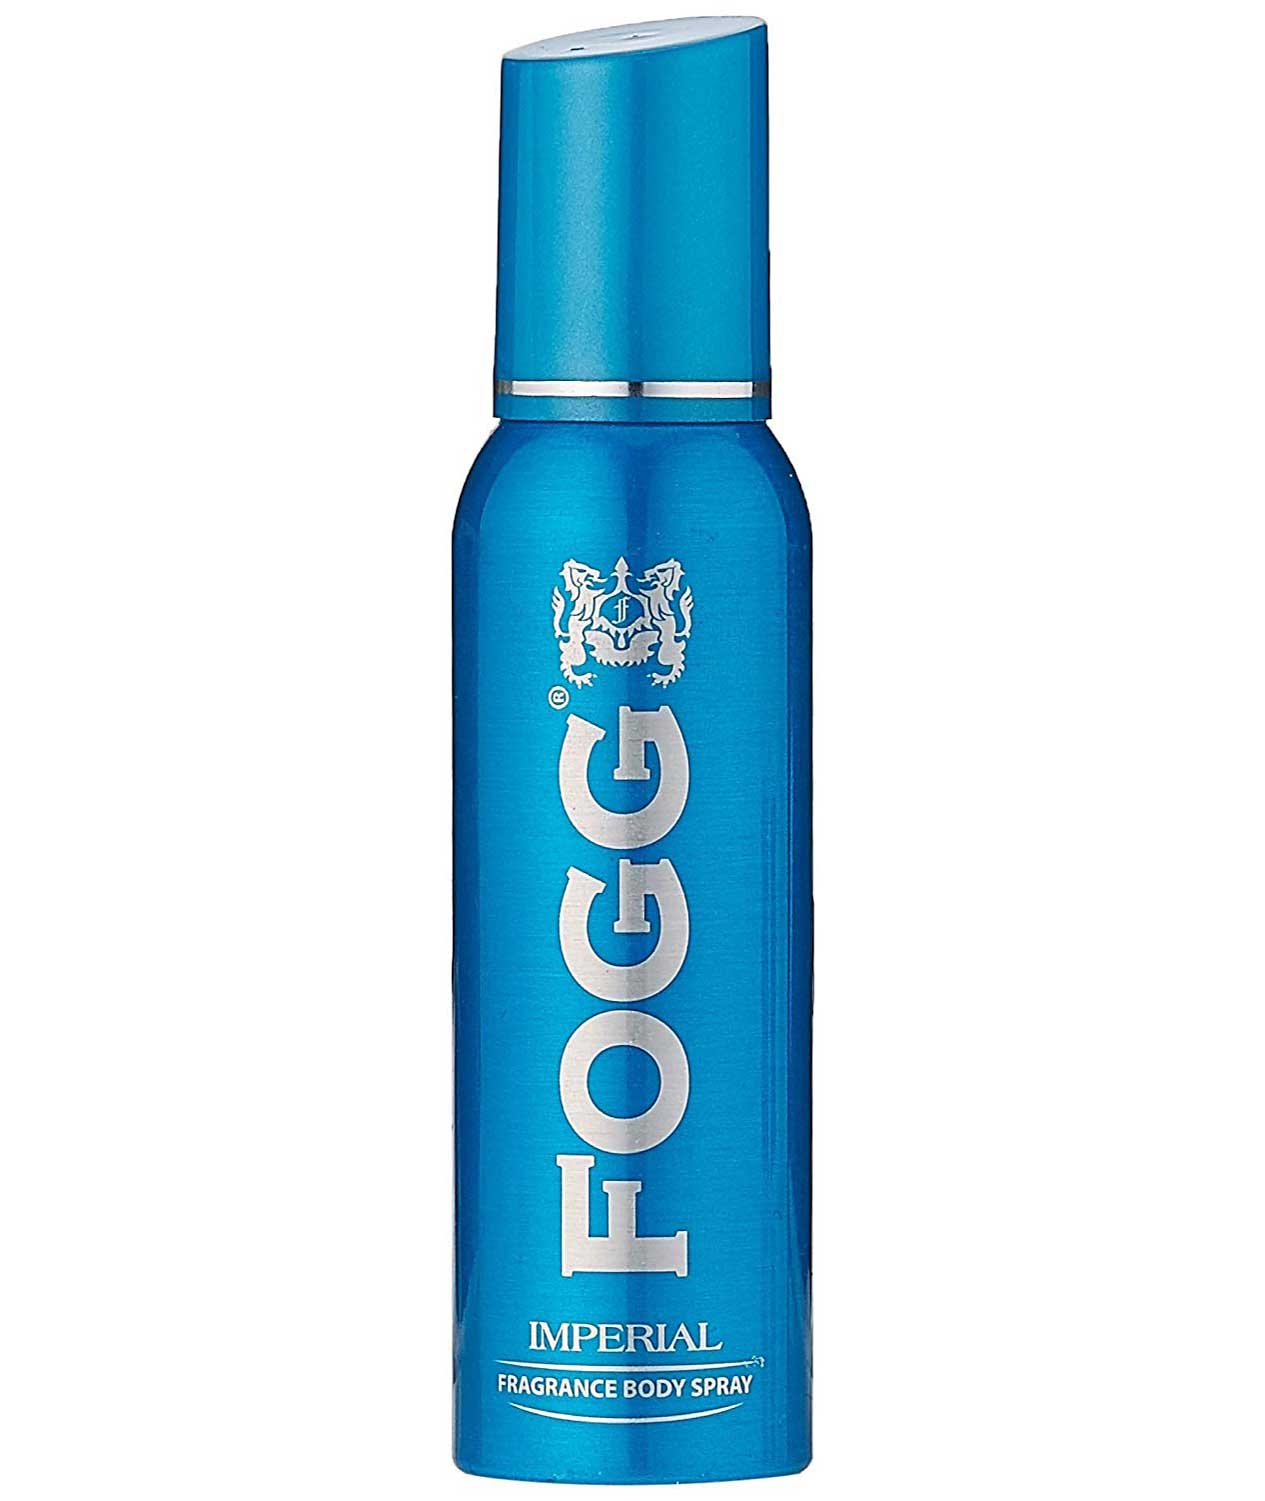 Fogg Sprays Fragrance Body Spray For Men Imperial, 150ml